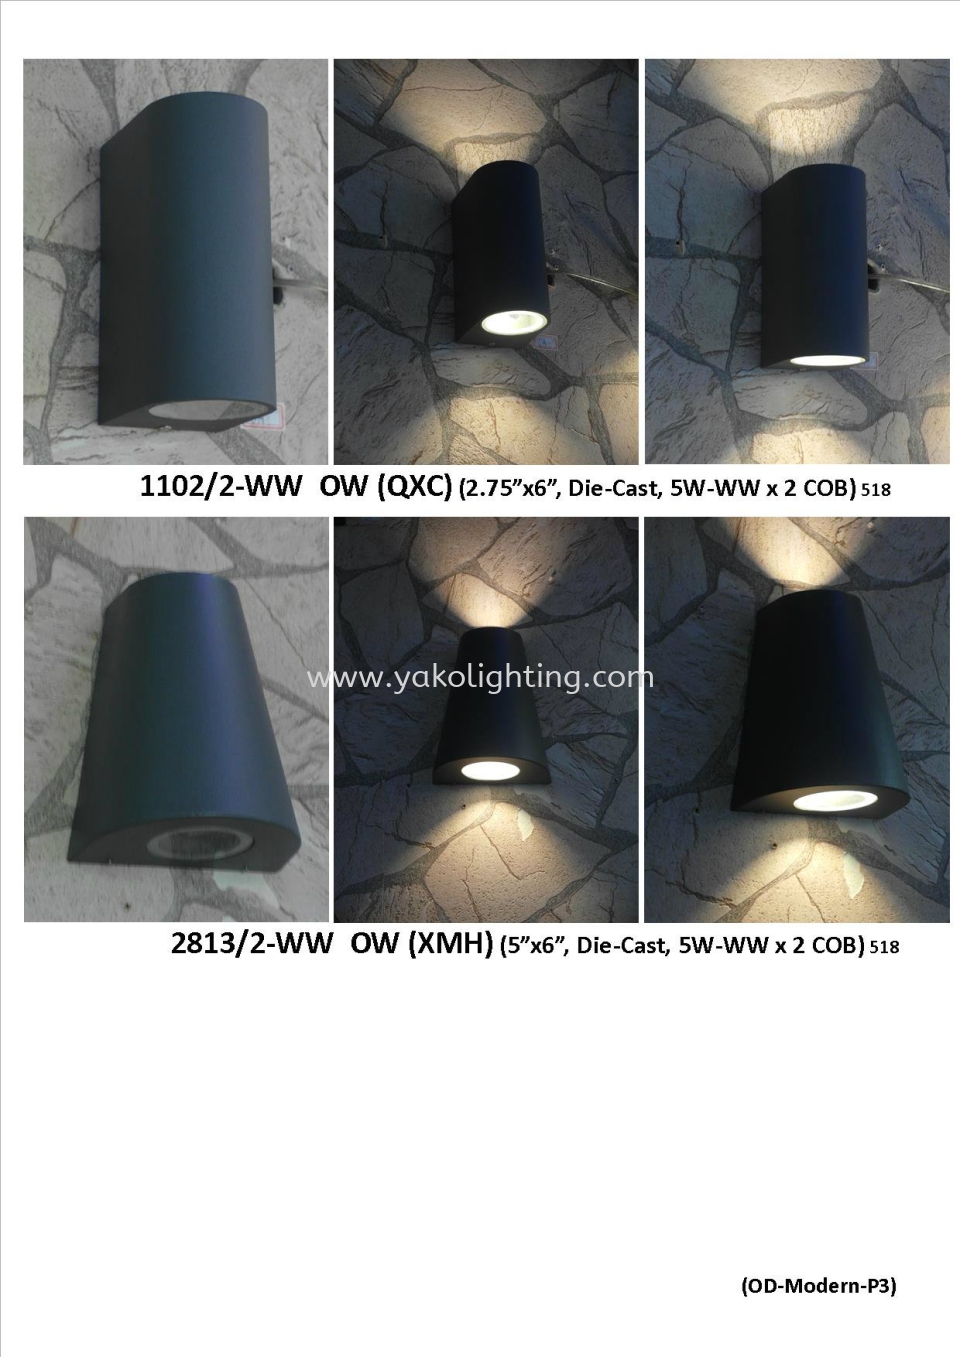 3034_1_OD-Modern-P3 OUTDOOR WALL LAMP OUTDOOR 